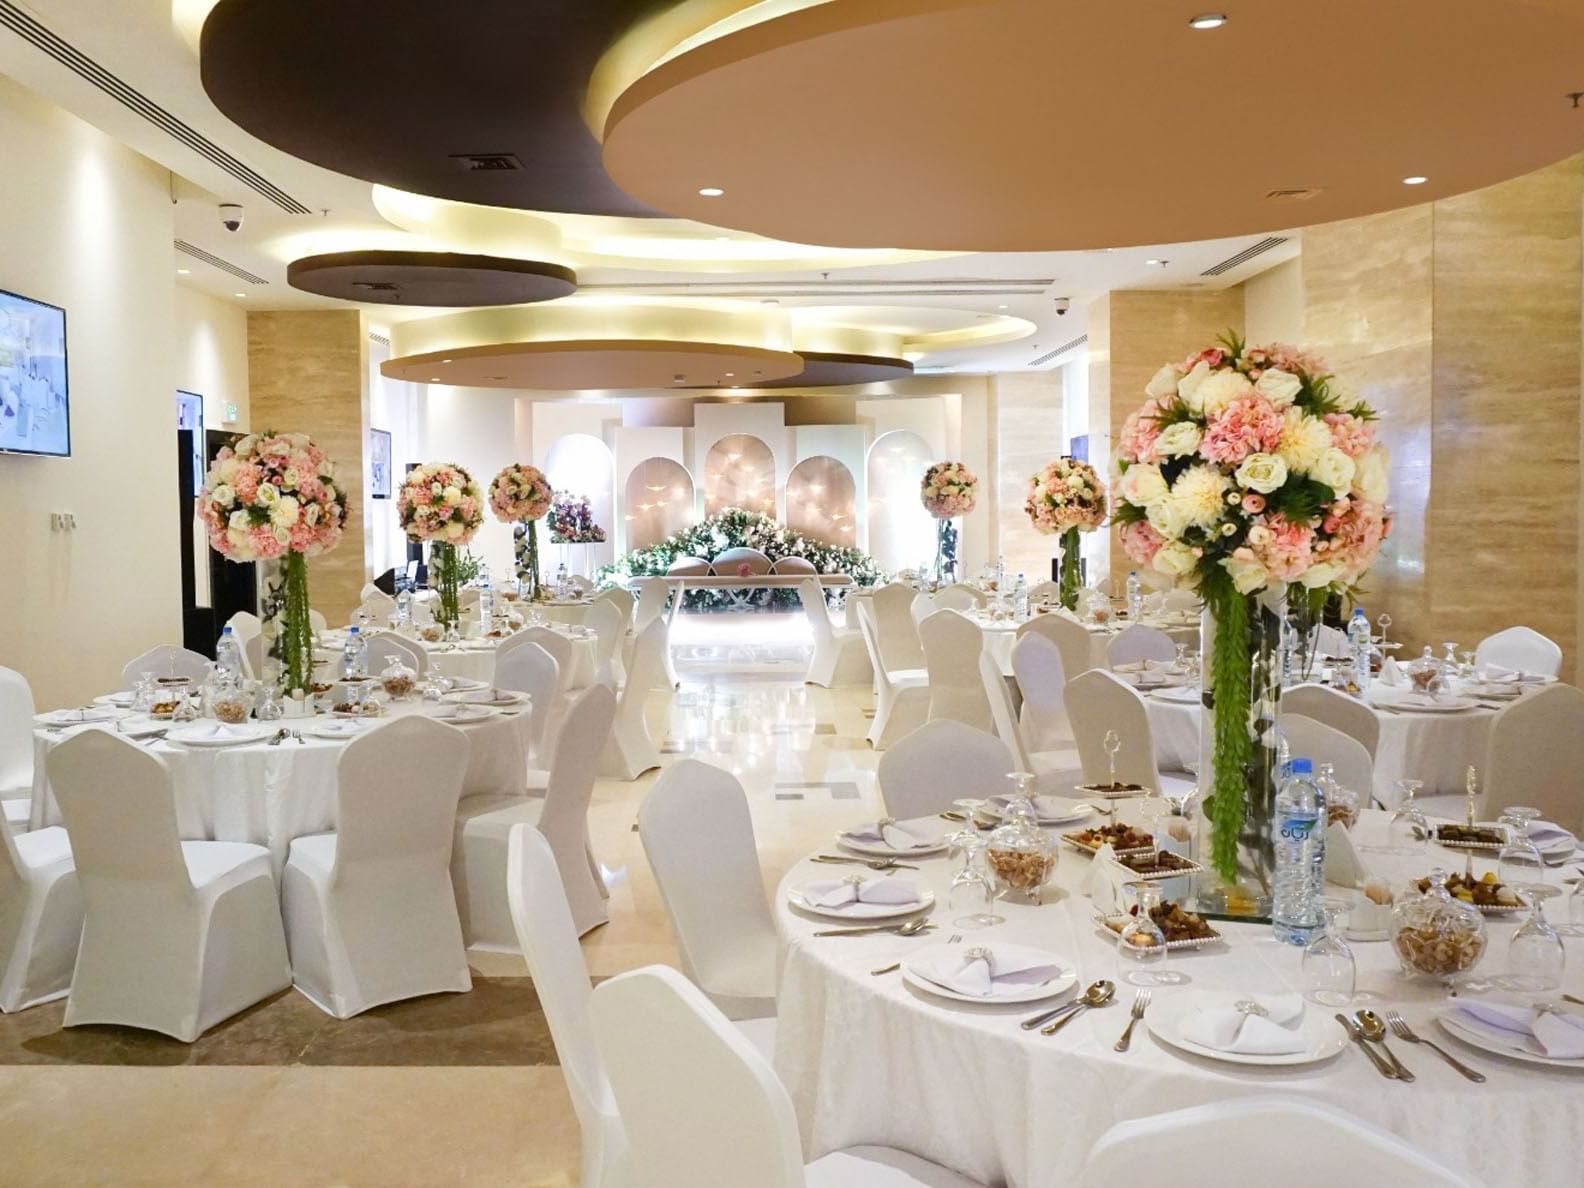 Decorated banquet table setup at The Royal Riviera Hotel